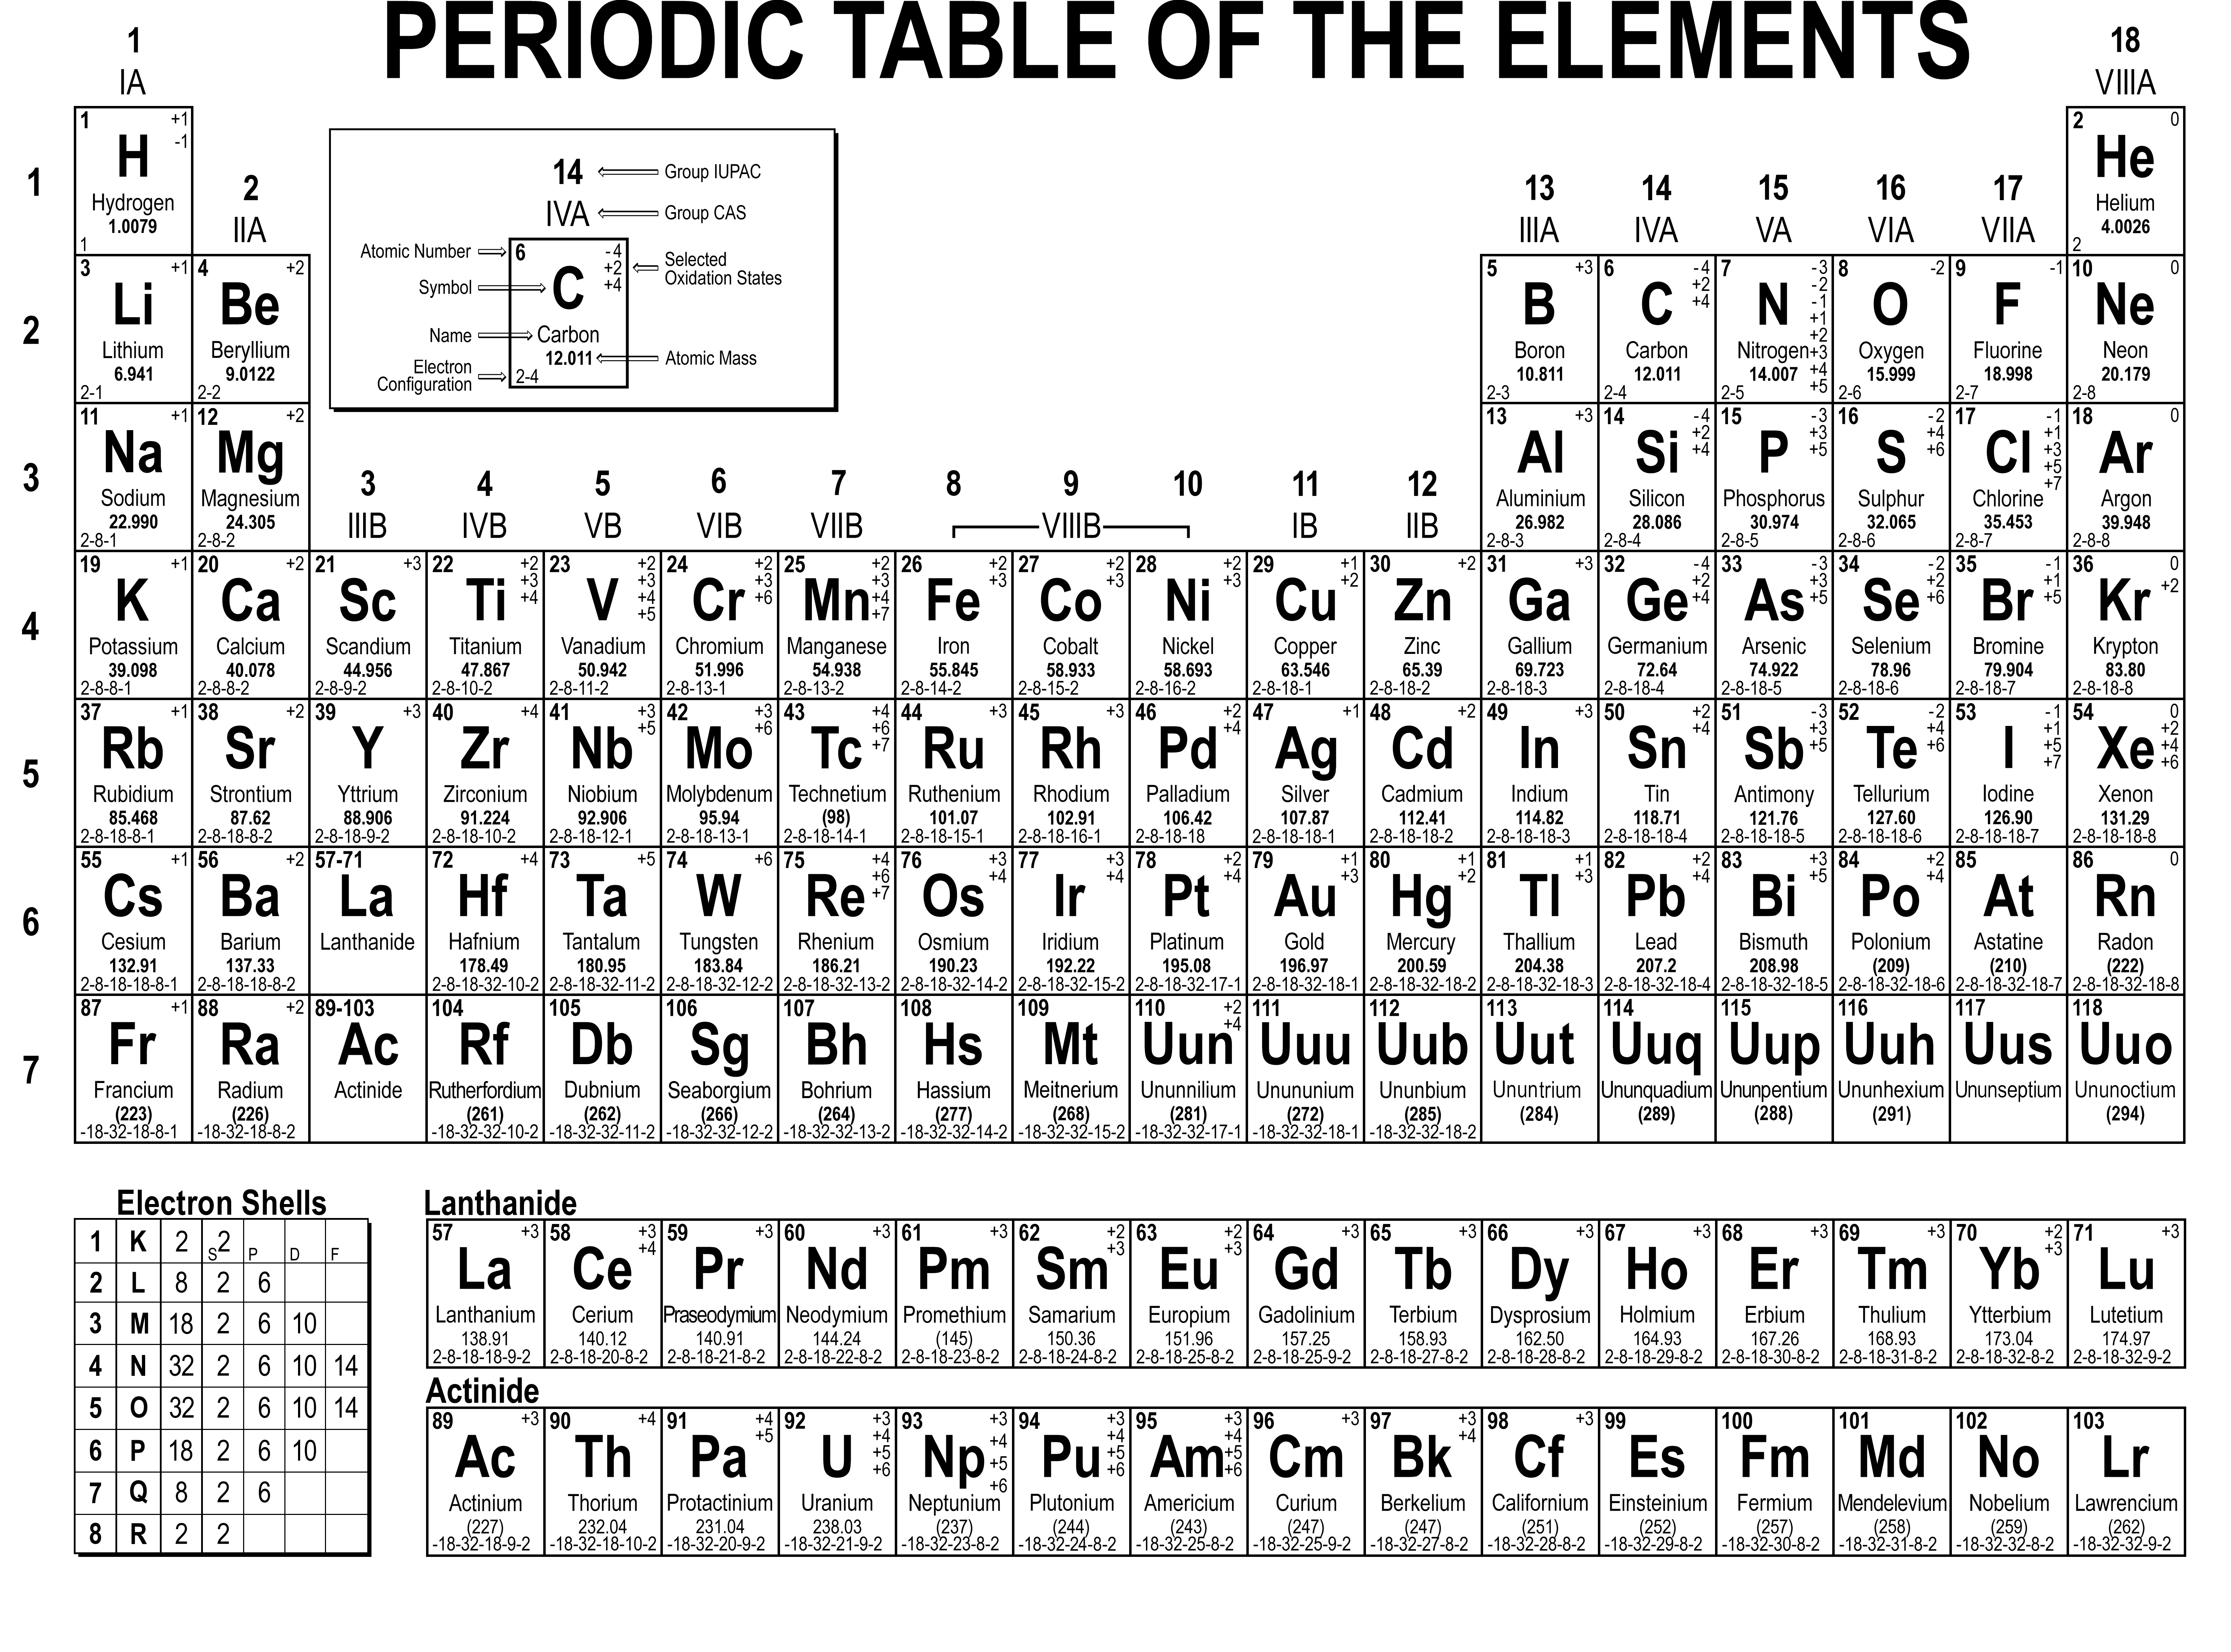 printable periodic tables